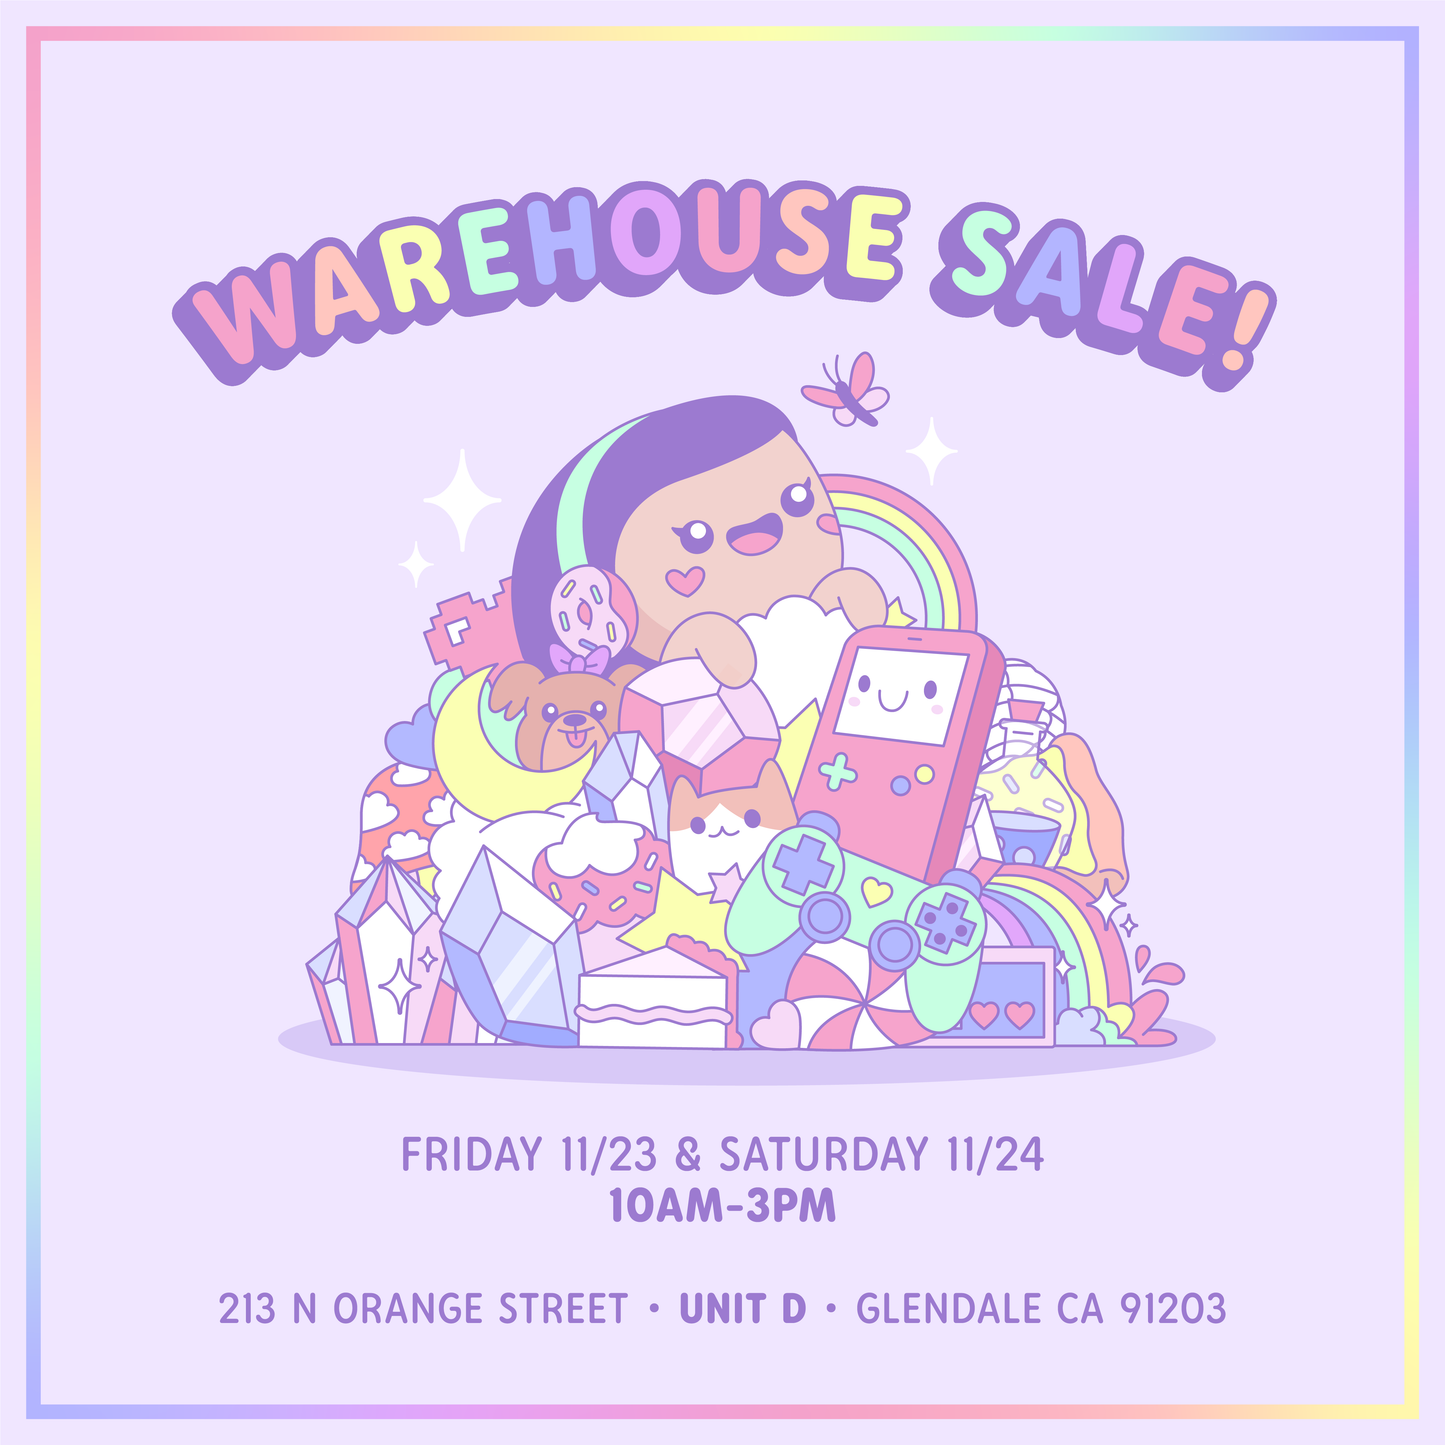 Black Friday Warehouse Sale